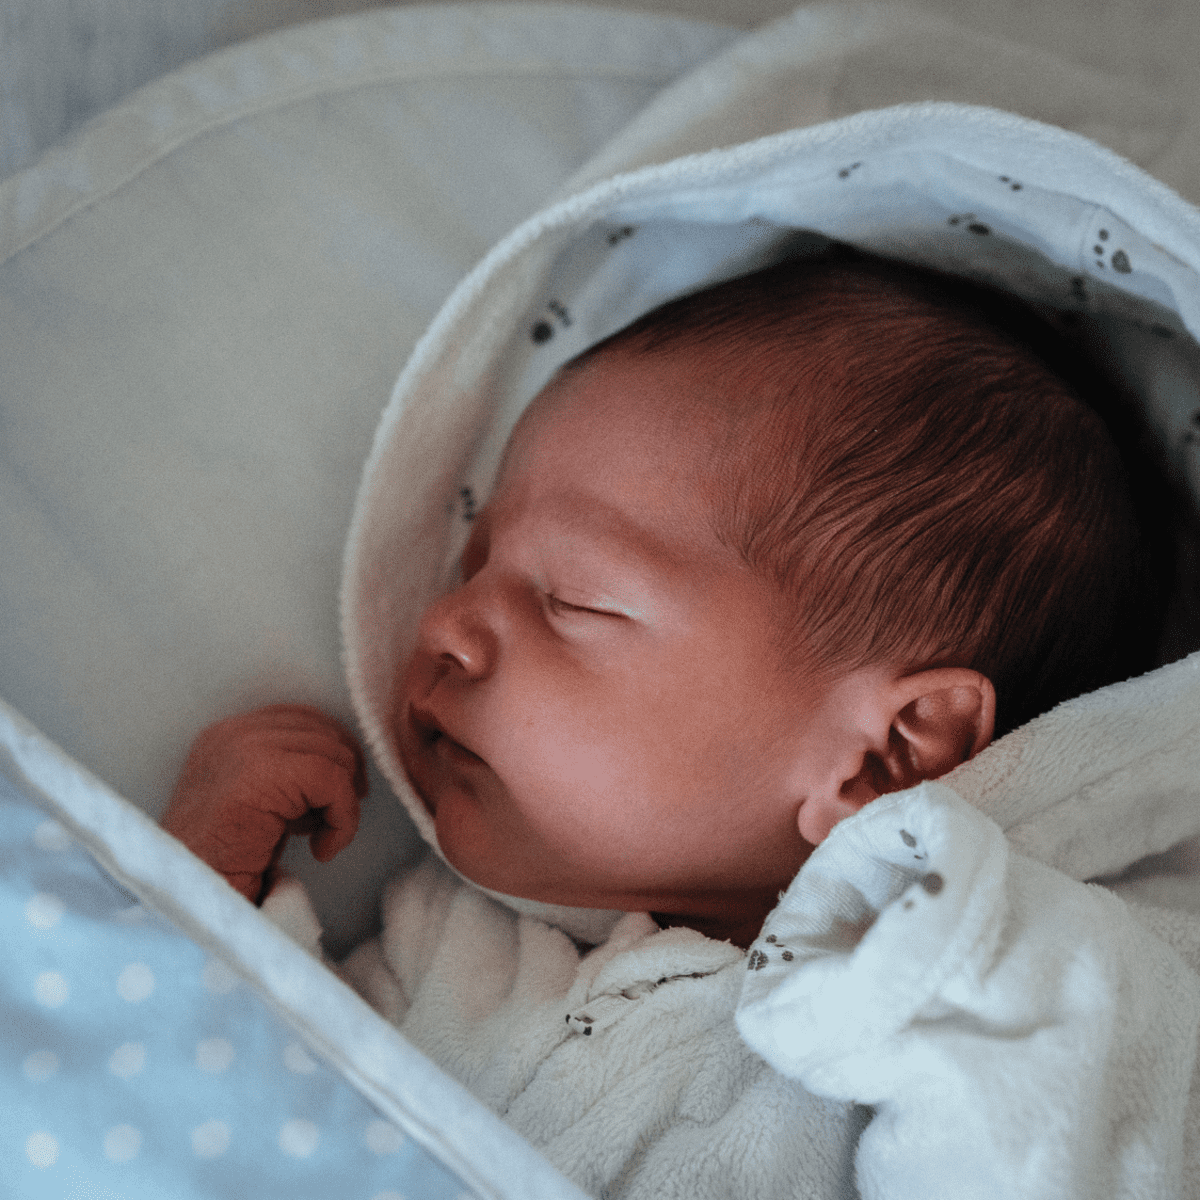 newborn baby girl in hospital just born